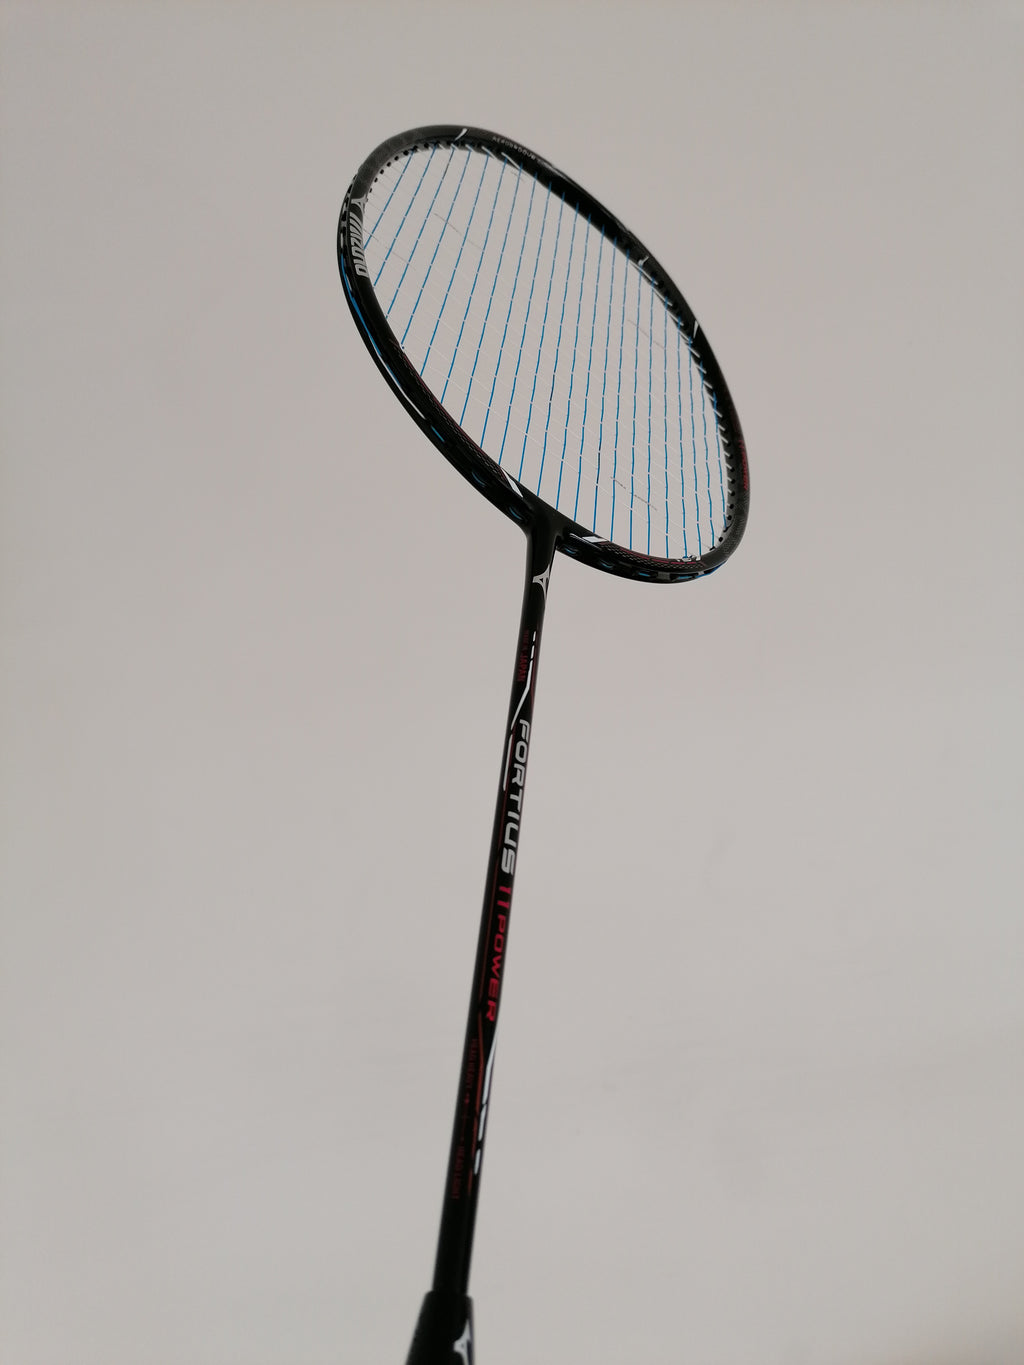 Mizuno Fortius 11 Power Badminton Racket | badminton racket review